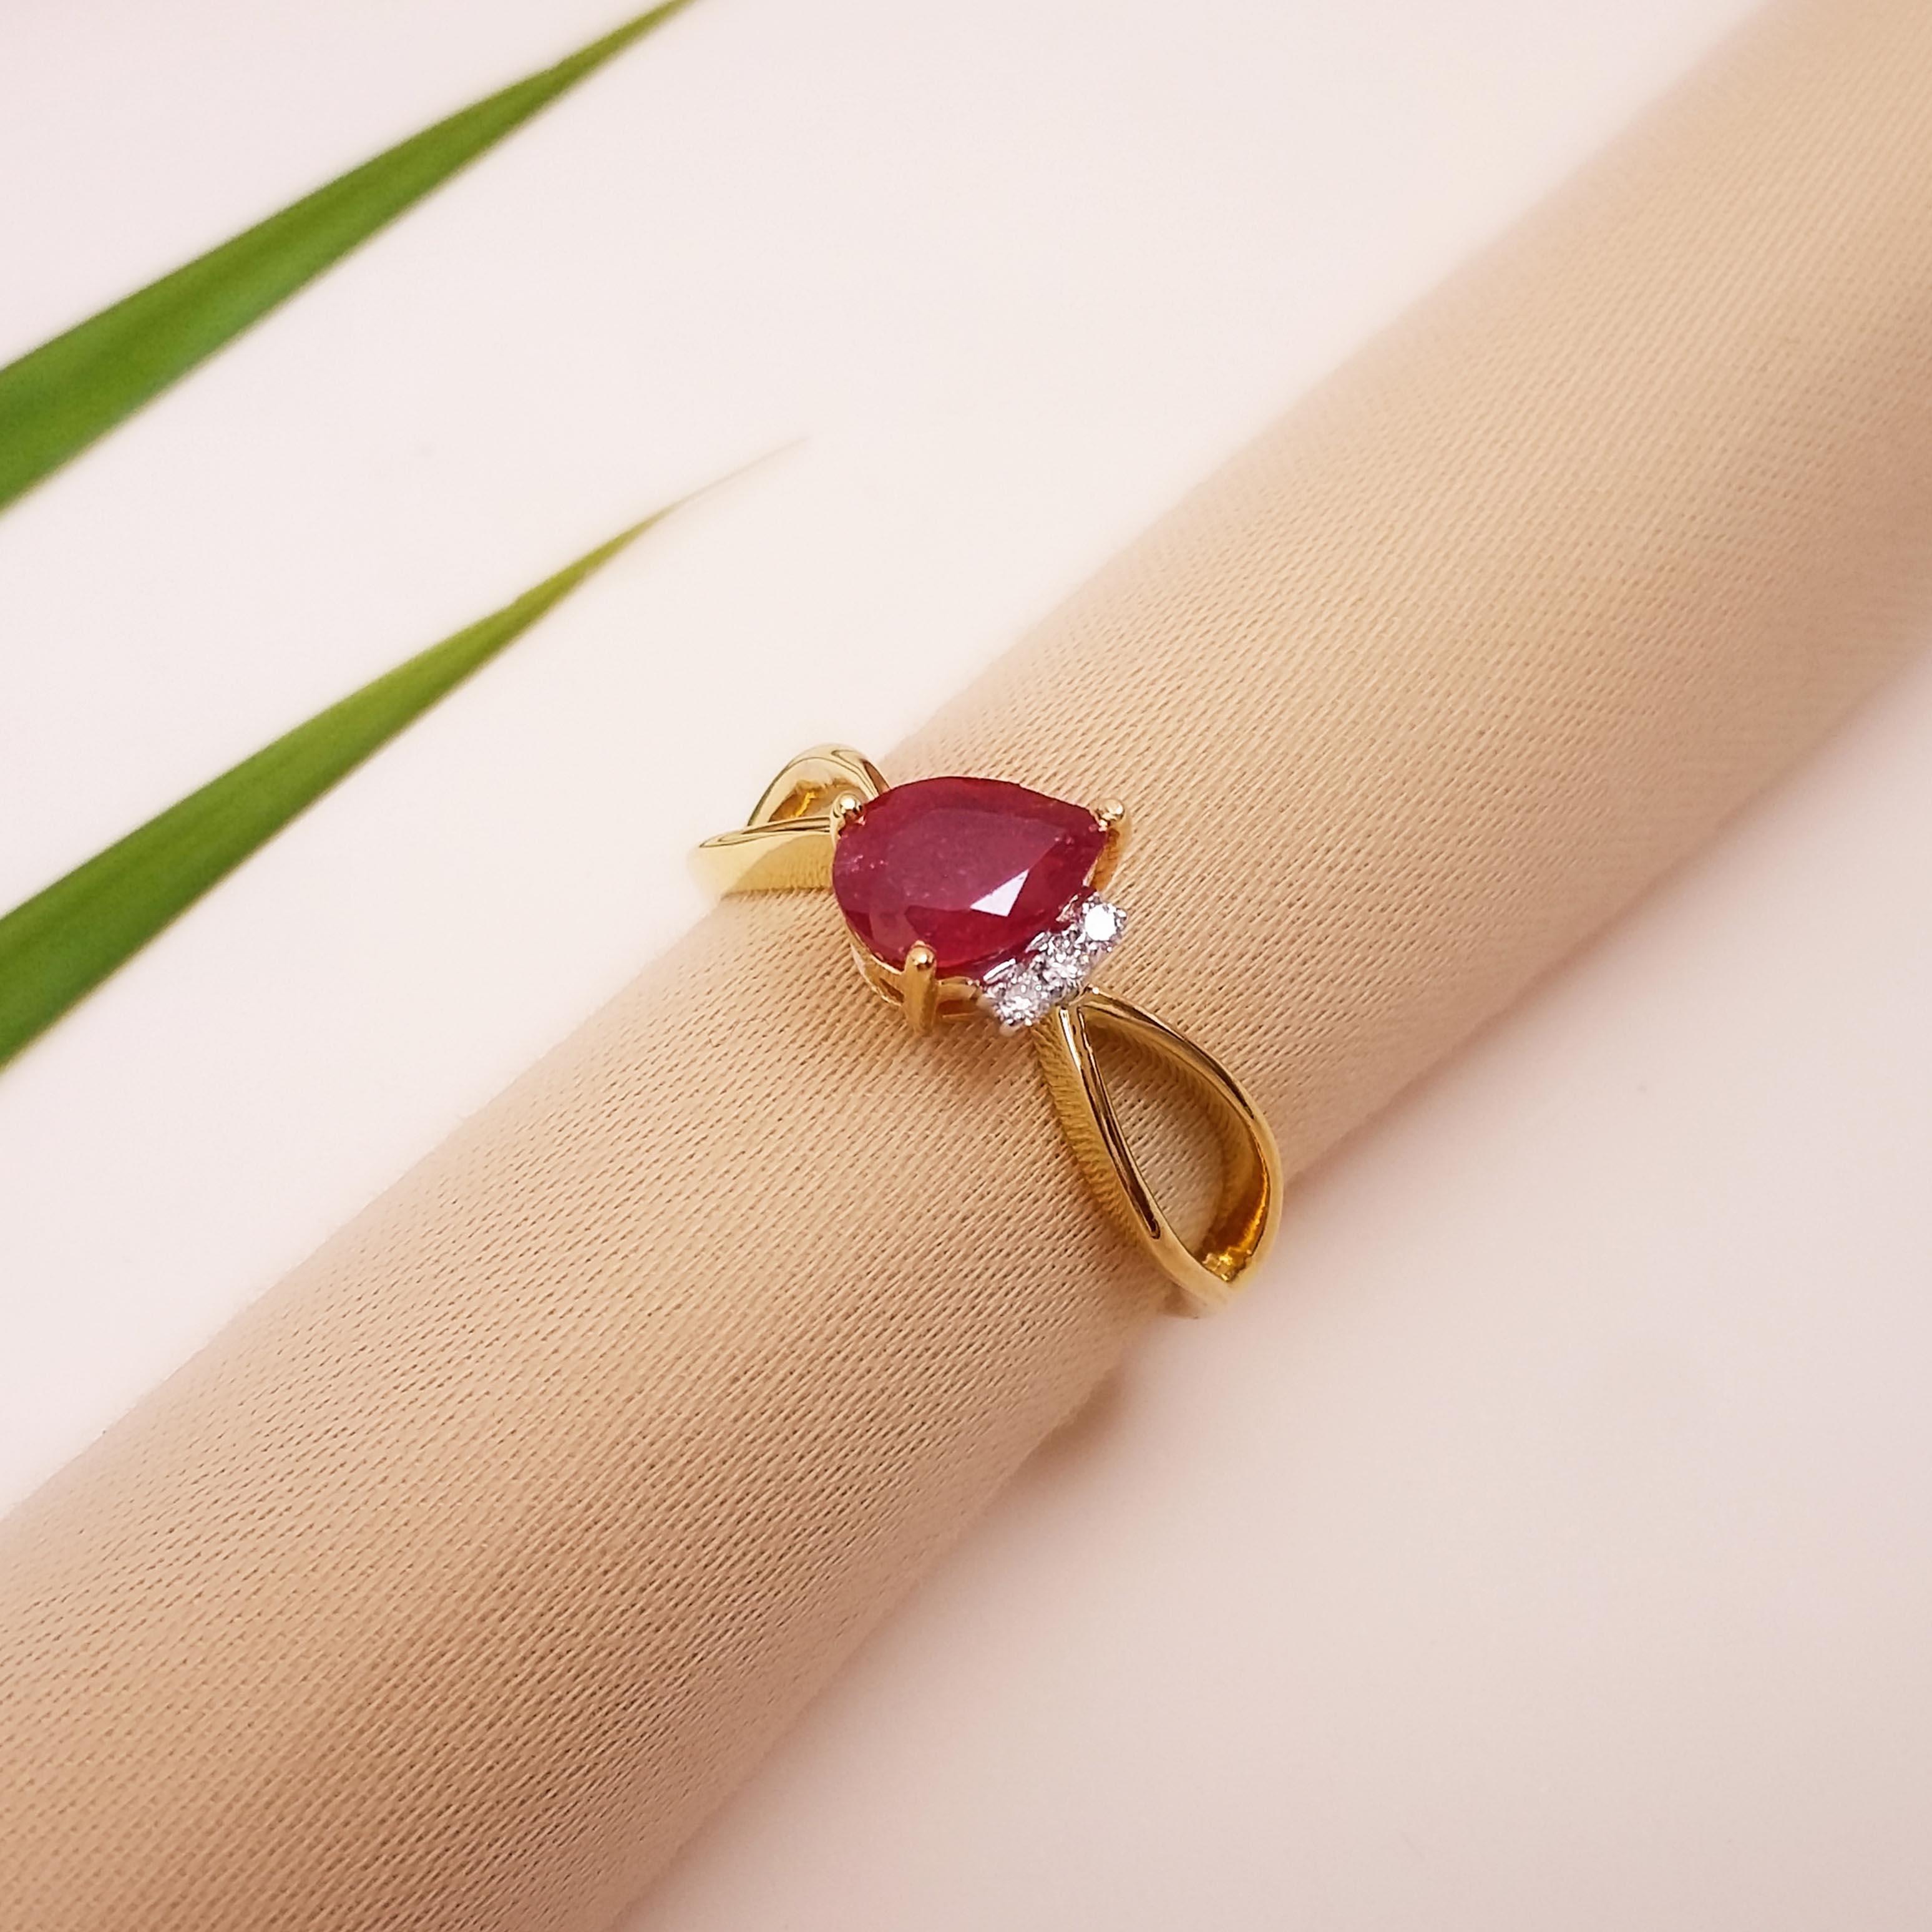 Buy Ruby Diamond Rings - Latest Ruby Diamond Rings Designs @ Rs 3285